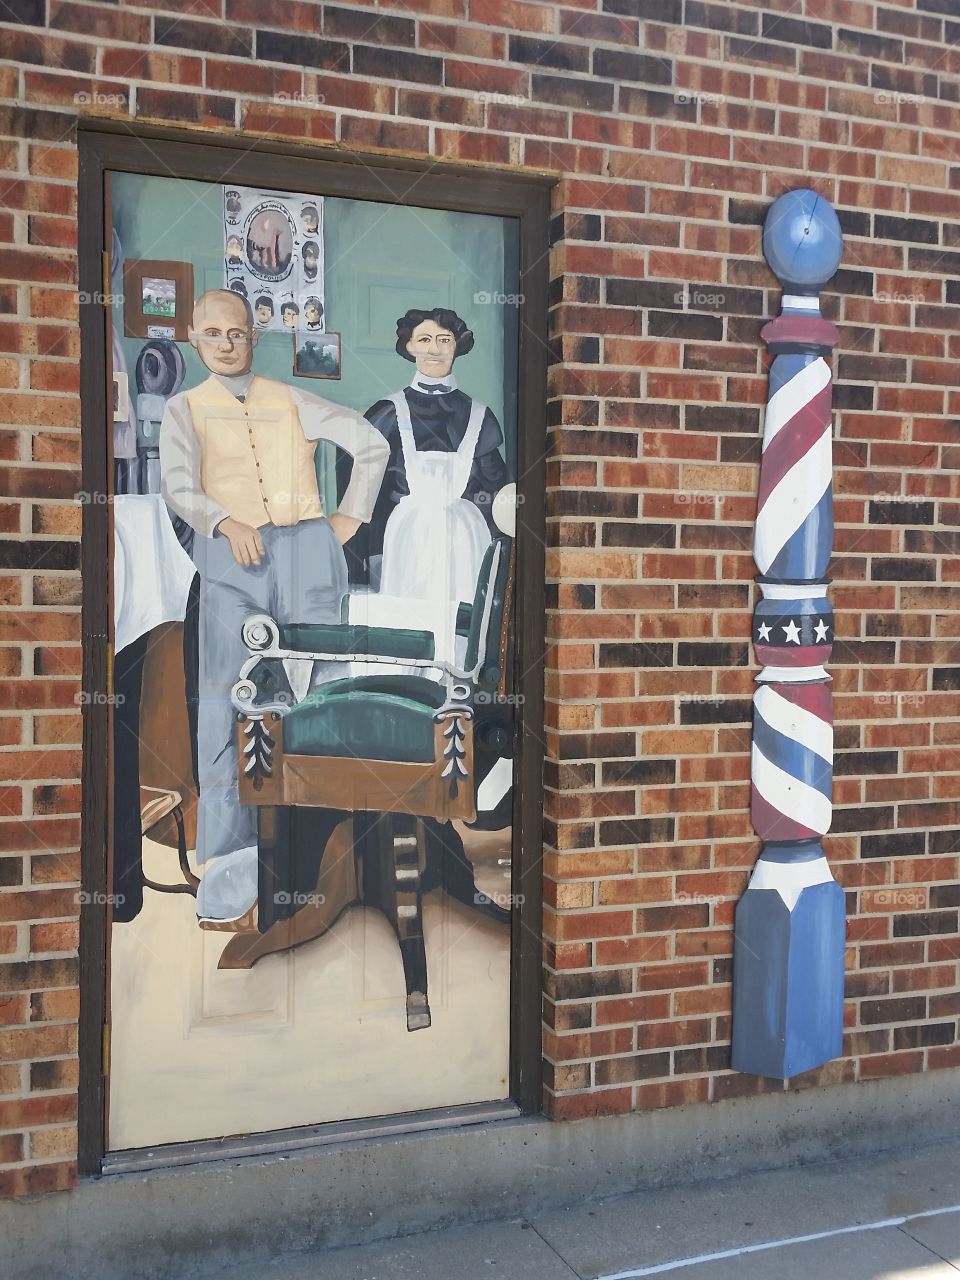 Barber shop mural